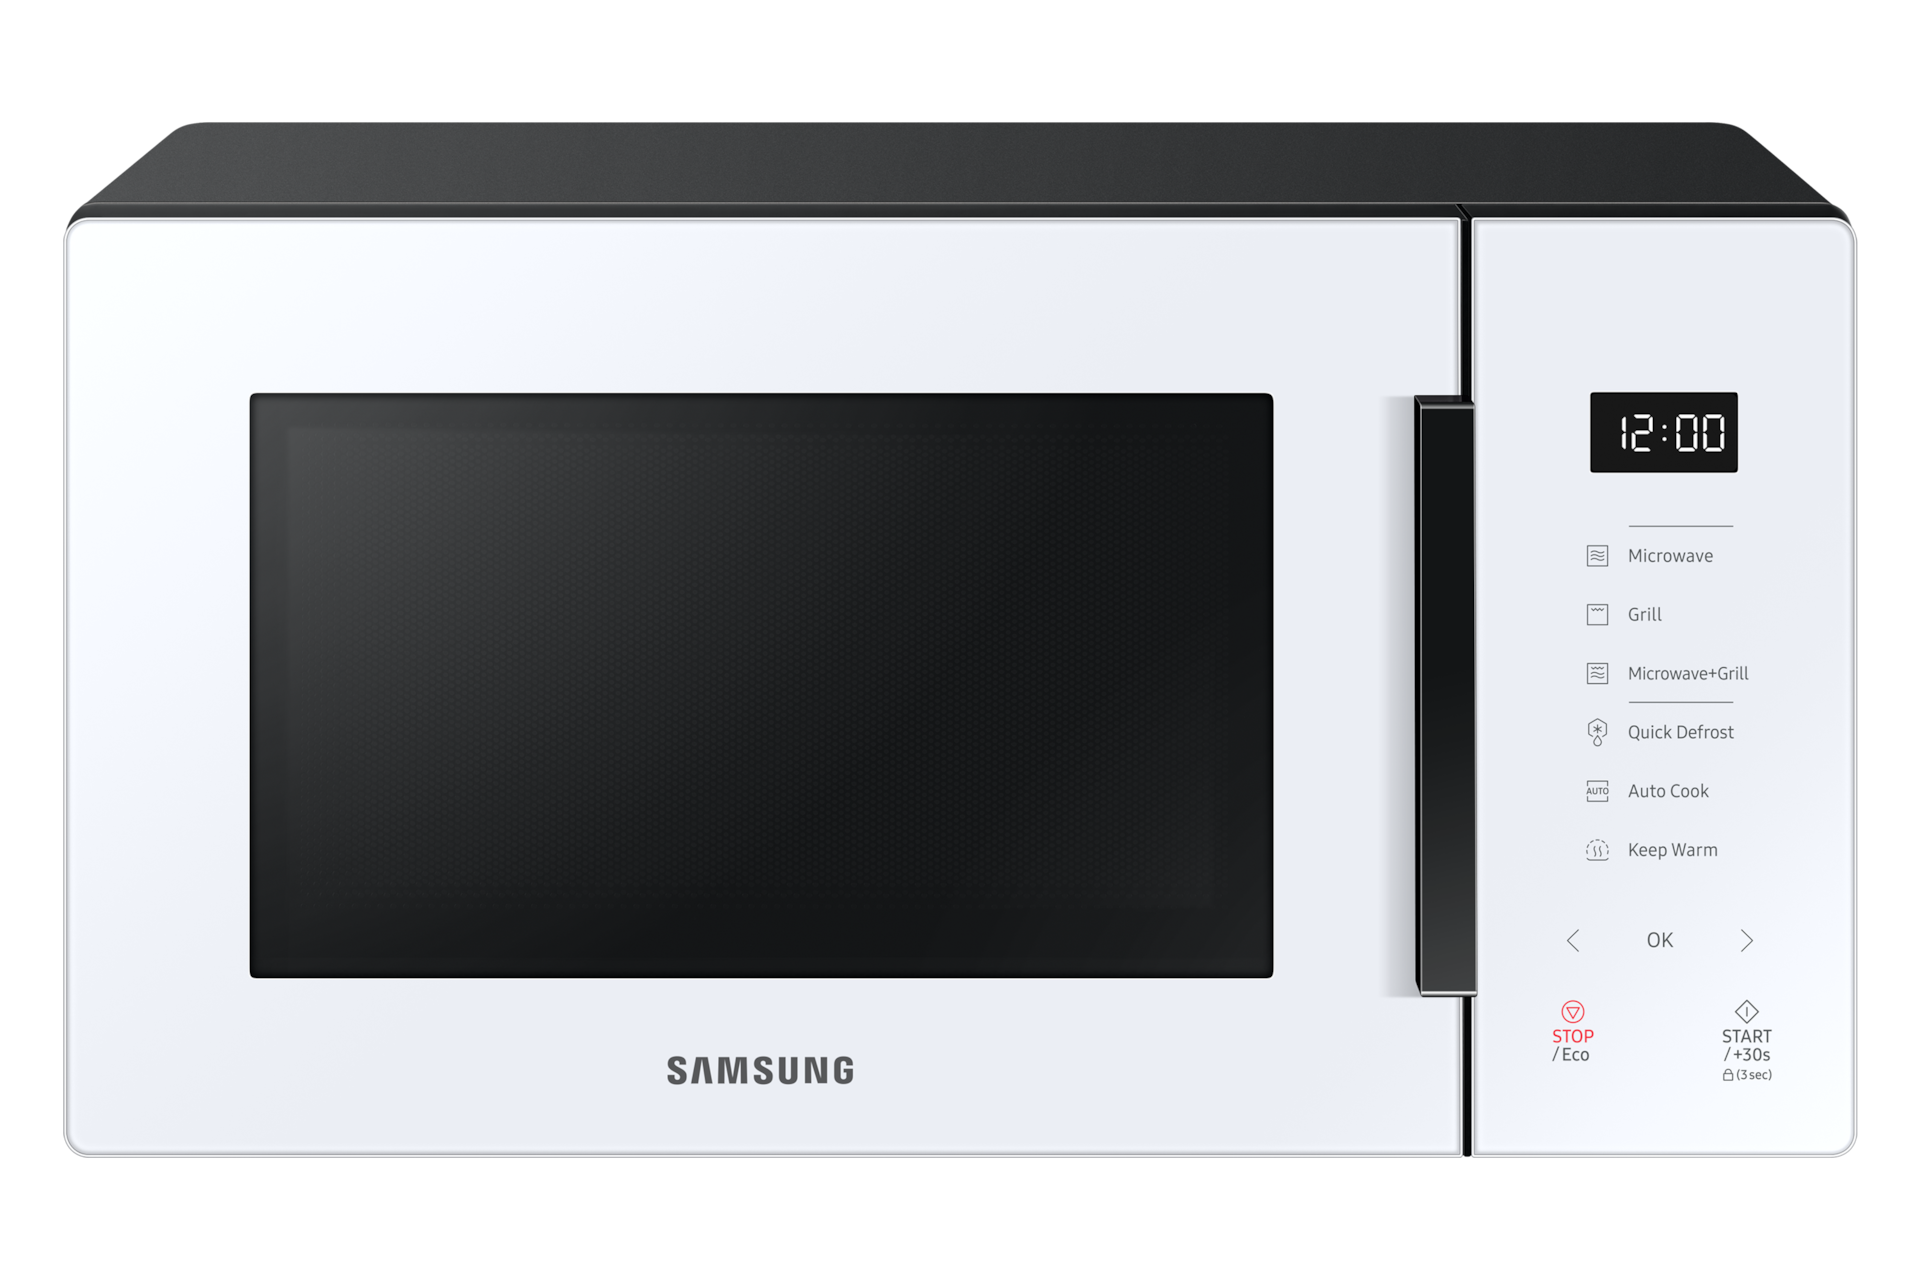 Samsung Four Micro-Onde - 230V-50Hz - 23L - Noir/Blanc - Prix pas cher